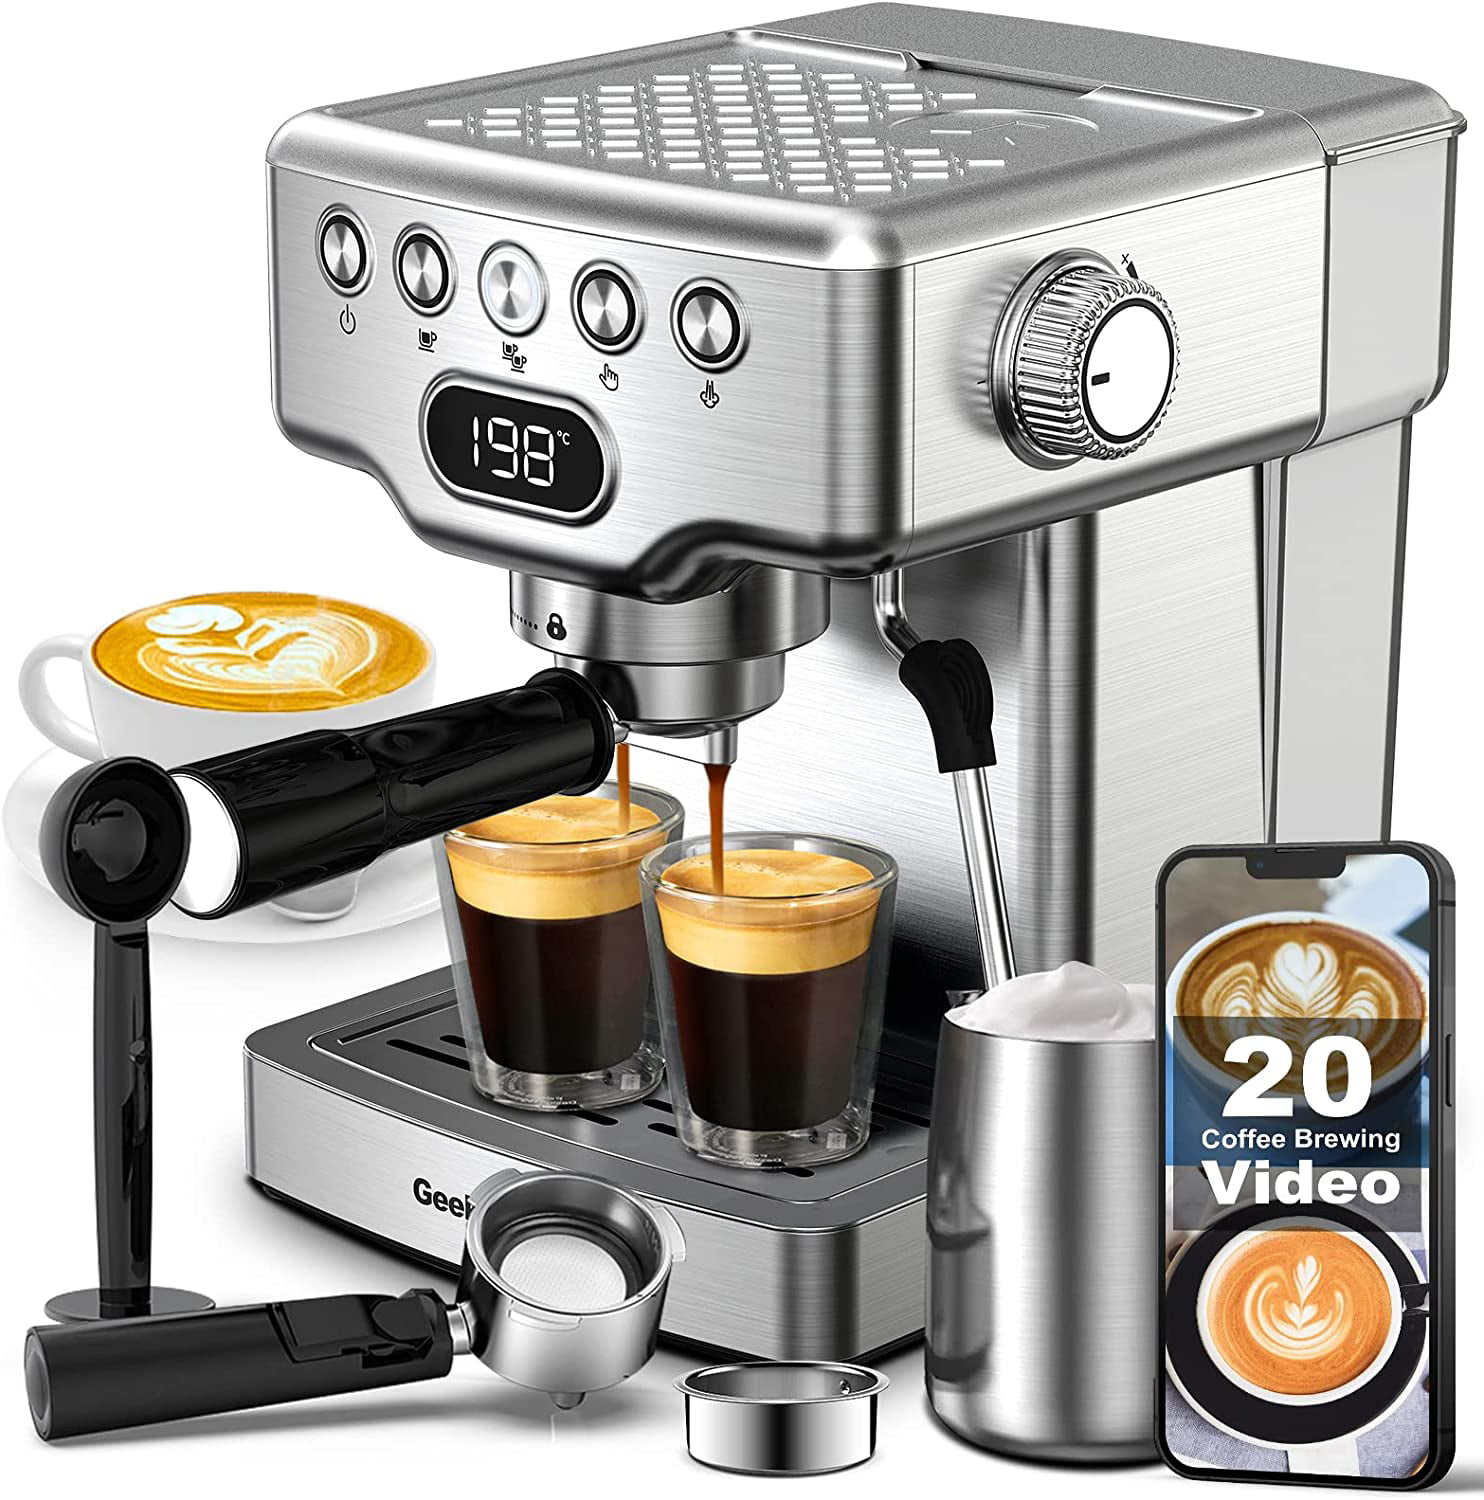  Espresso Machine 20 Bar with Milk Frother Steam Wand